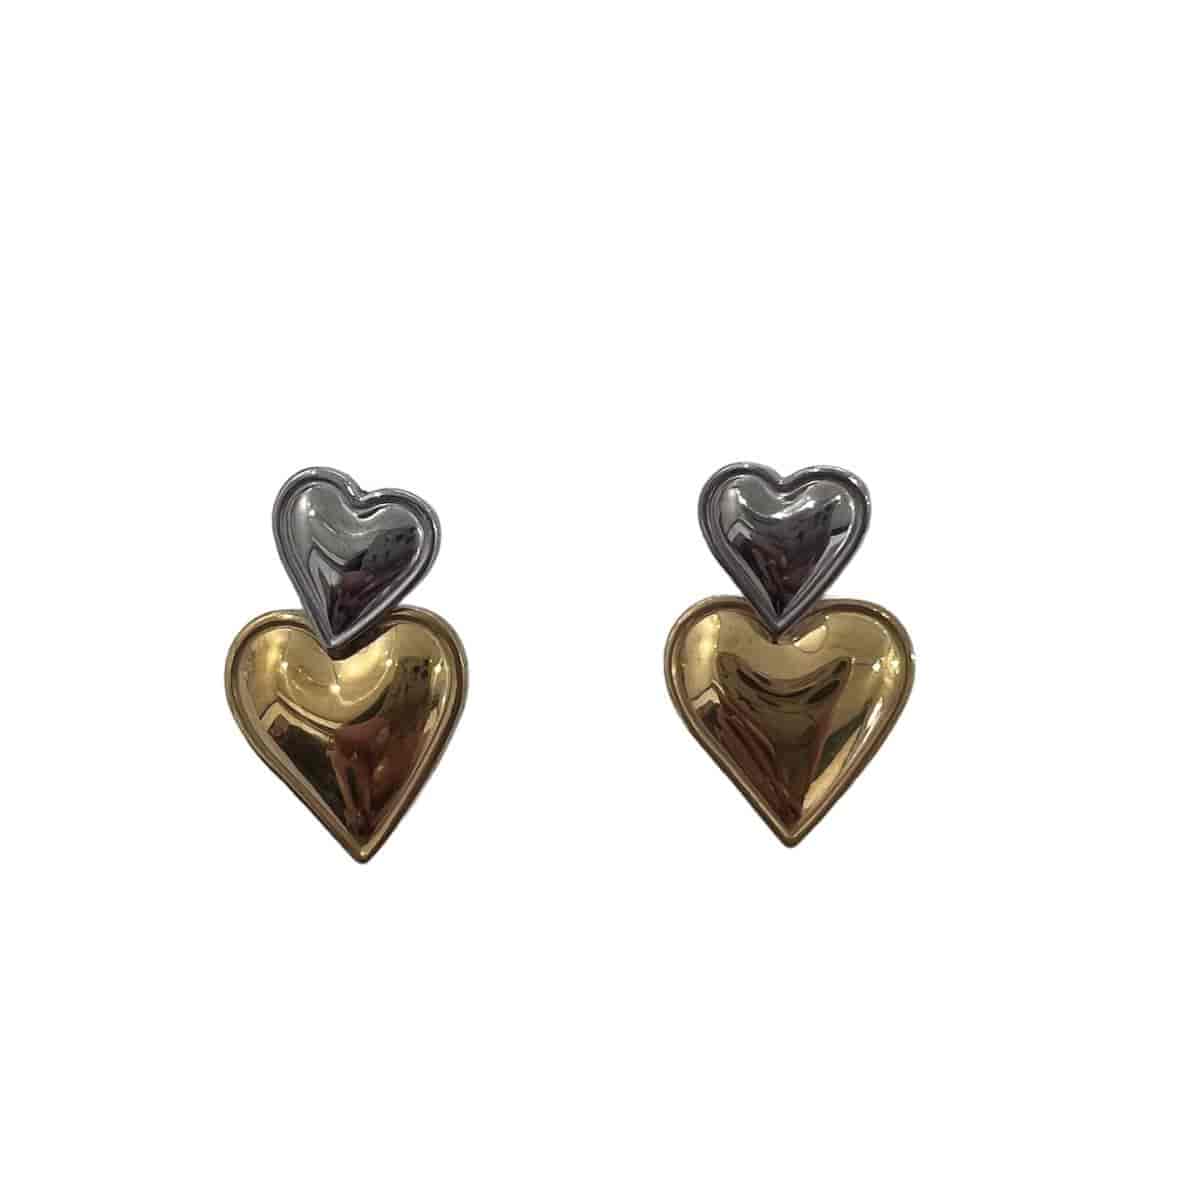 EHO1-1197 Σκουλαρίκια δίχρωμα ατσάλινα με μικρές και μεγάλες καρδιές ασημί χρυσό